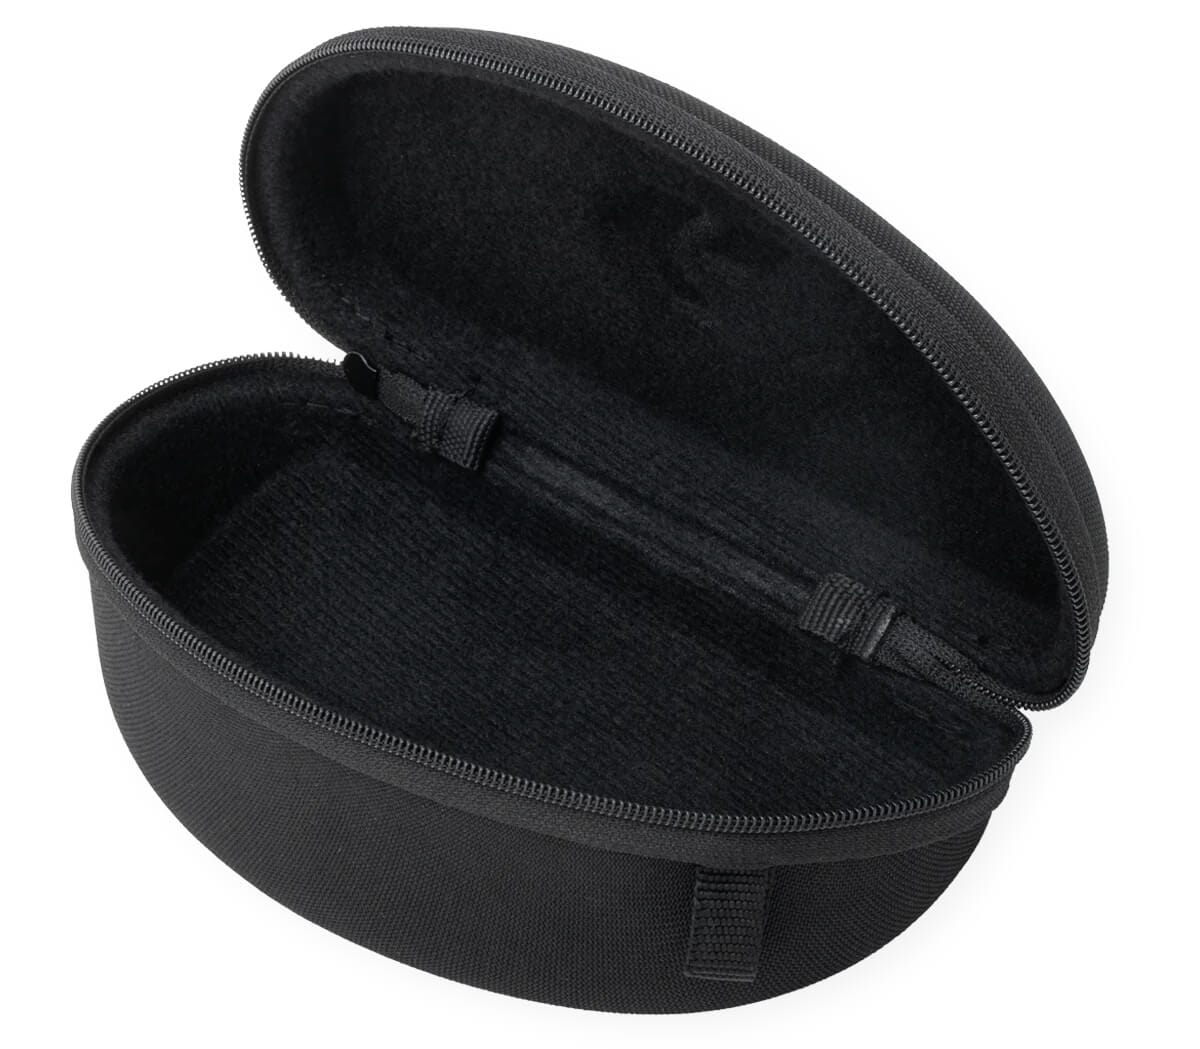 Gatorz Blastshield Ballistic Safety Glasses with Black Cerakote Frame and Smoke Anti-Fog Lens Hard Case